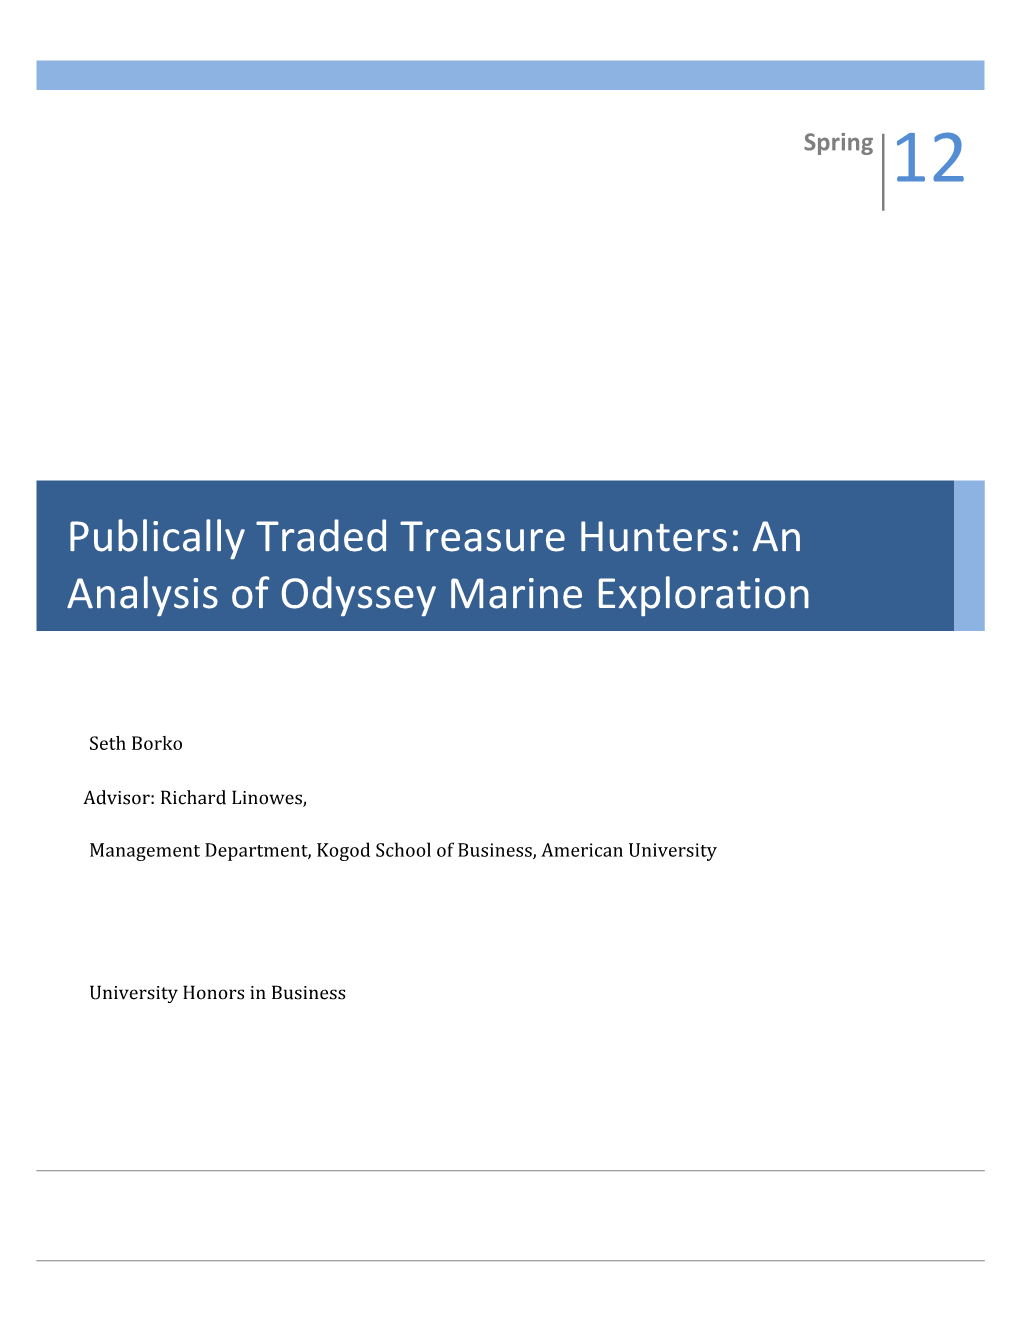 An Analysis of Odyssey Marine Exploration